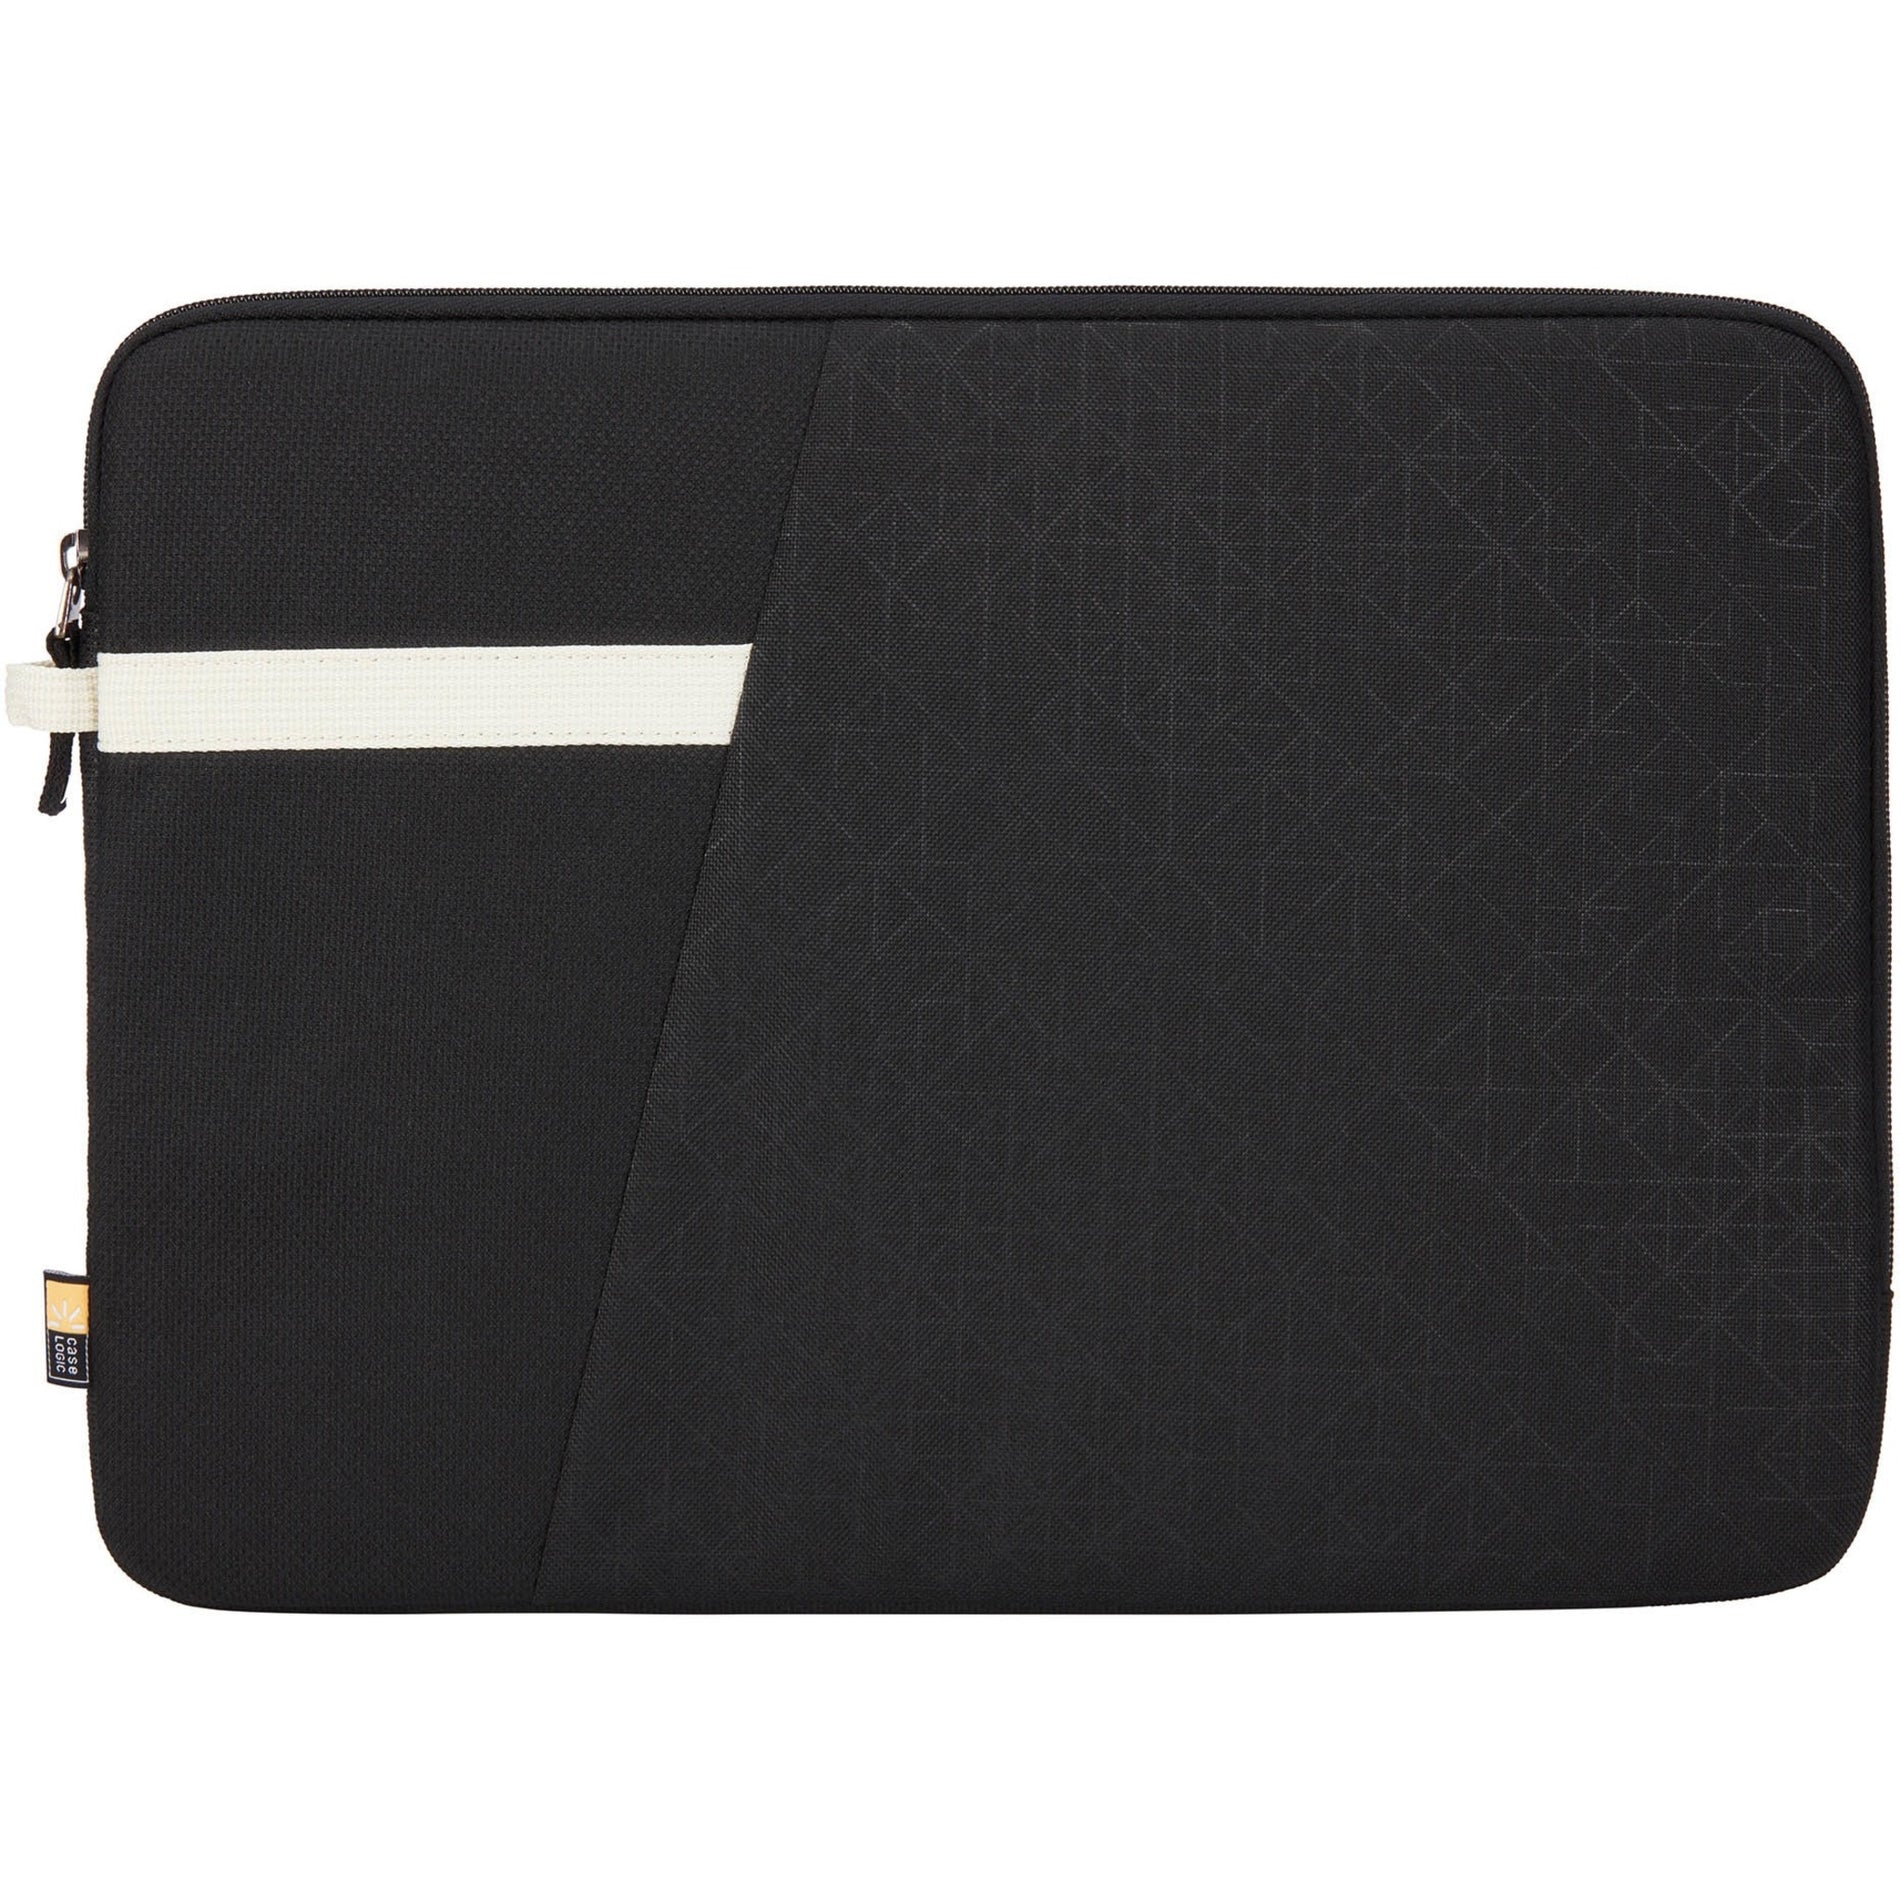 Case Logic 3204390 Ibira 13" Laptop Sleeve, Black, Zipper Closure, Lightweight and Protective